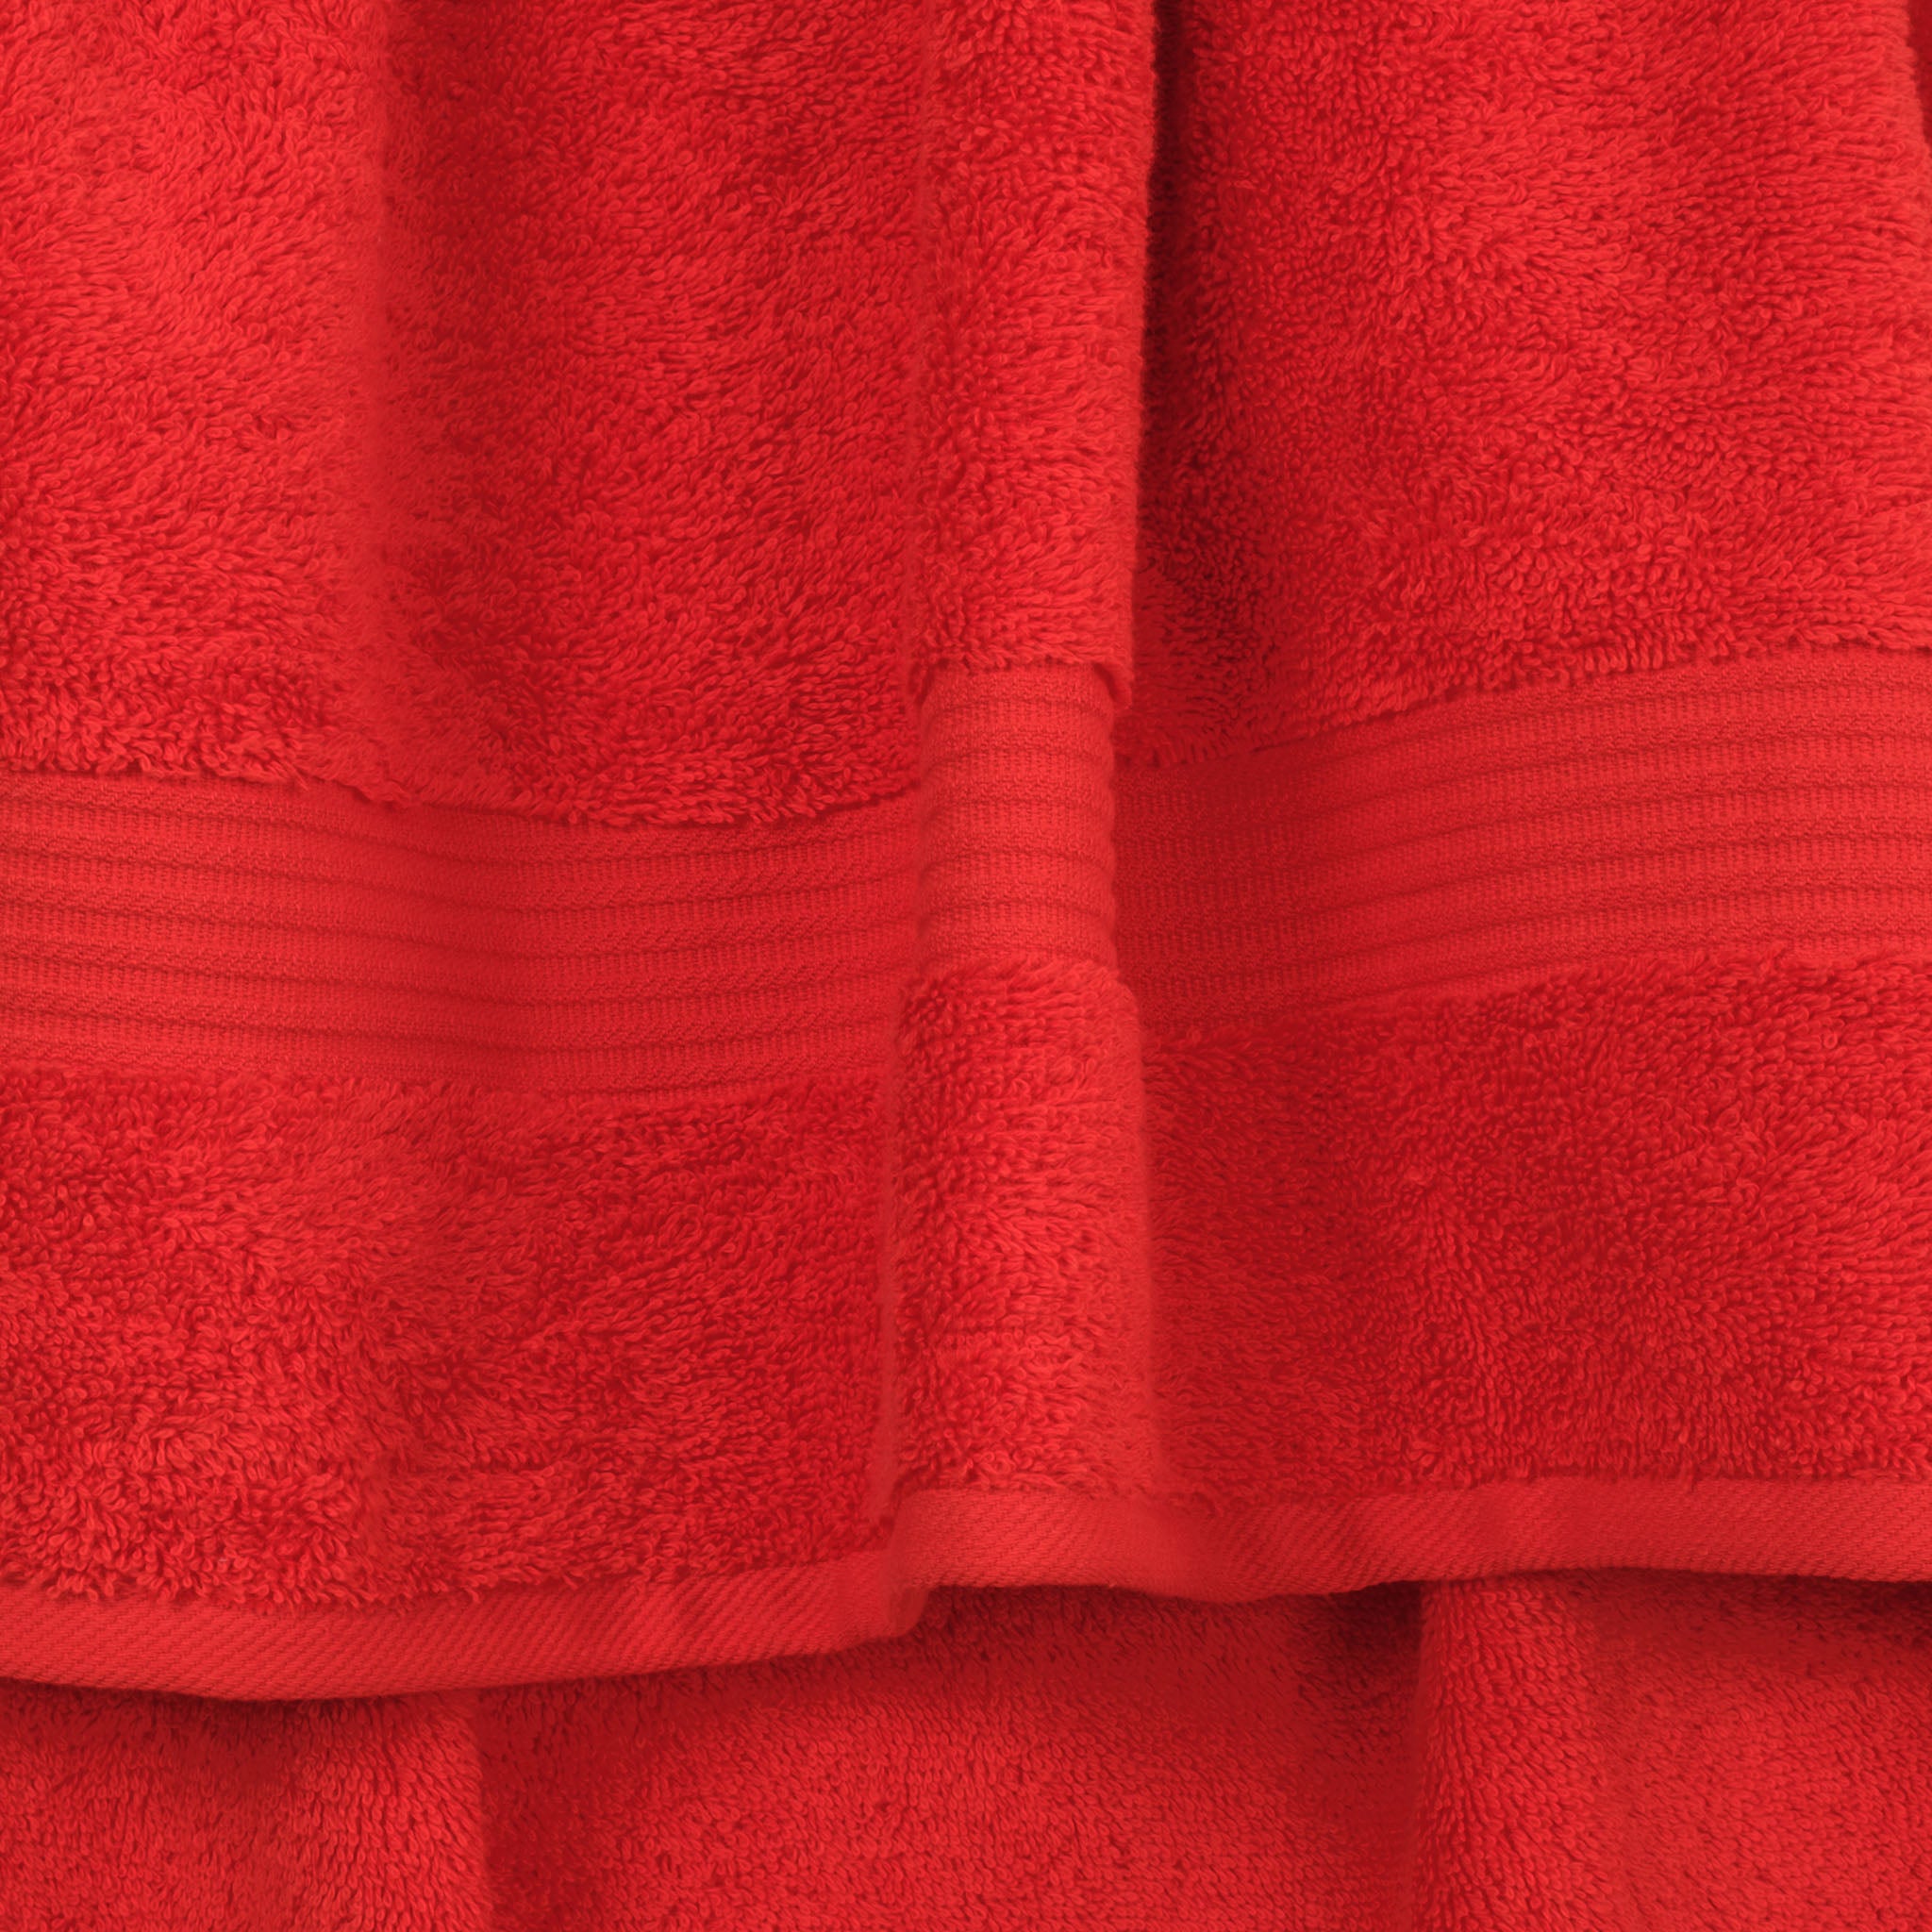 American Soft Linen Bekos 100% Cotton Turkish Towels, 4 Piece Bath Towel Set -red-03